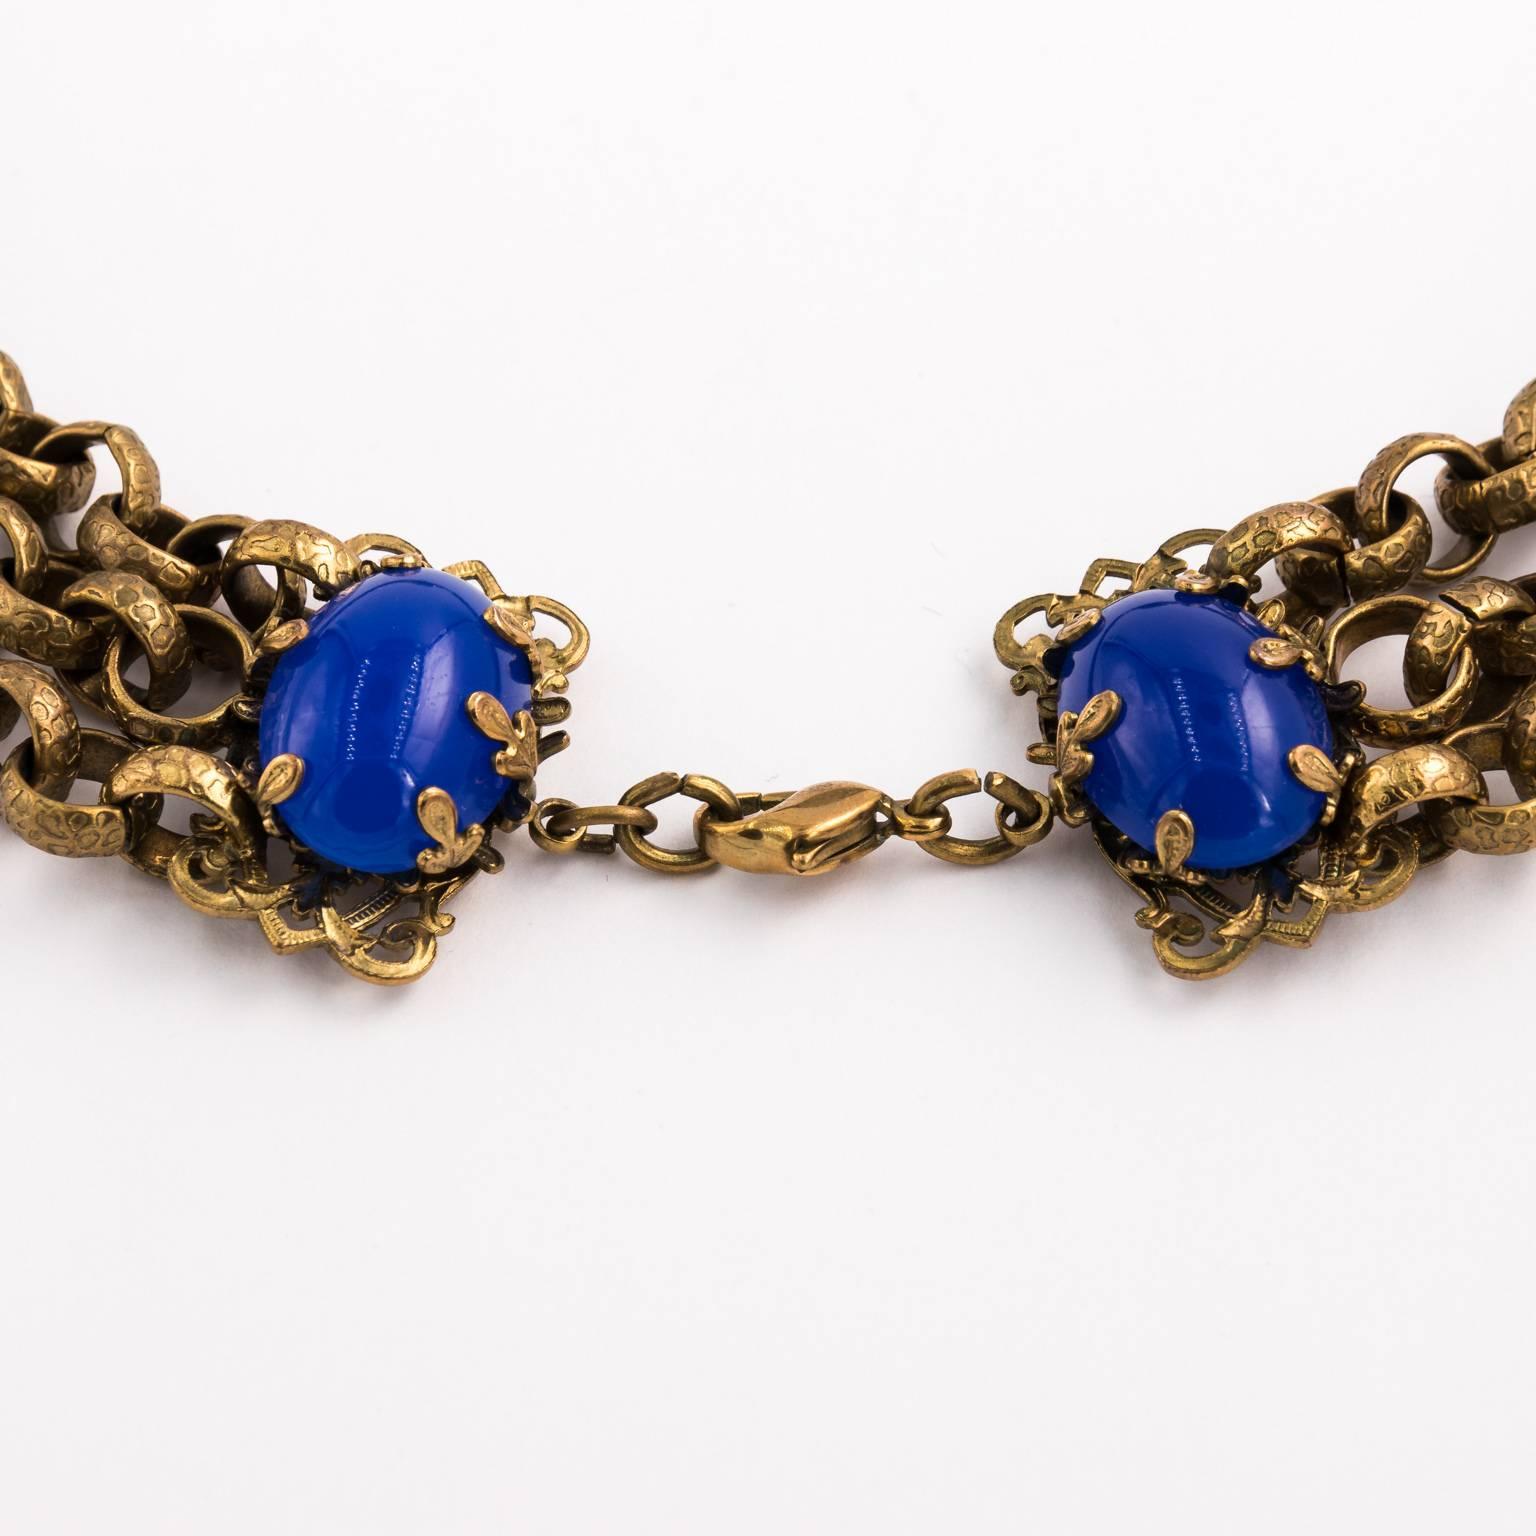 Art Deco Bijoux Heart Necklace with Large Citrine Glass Centre Piece by Dita Von Teese